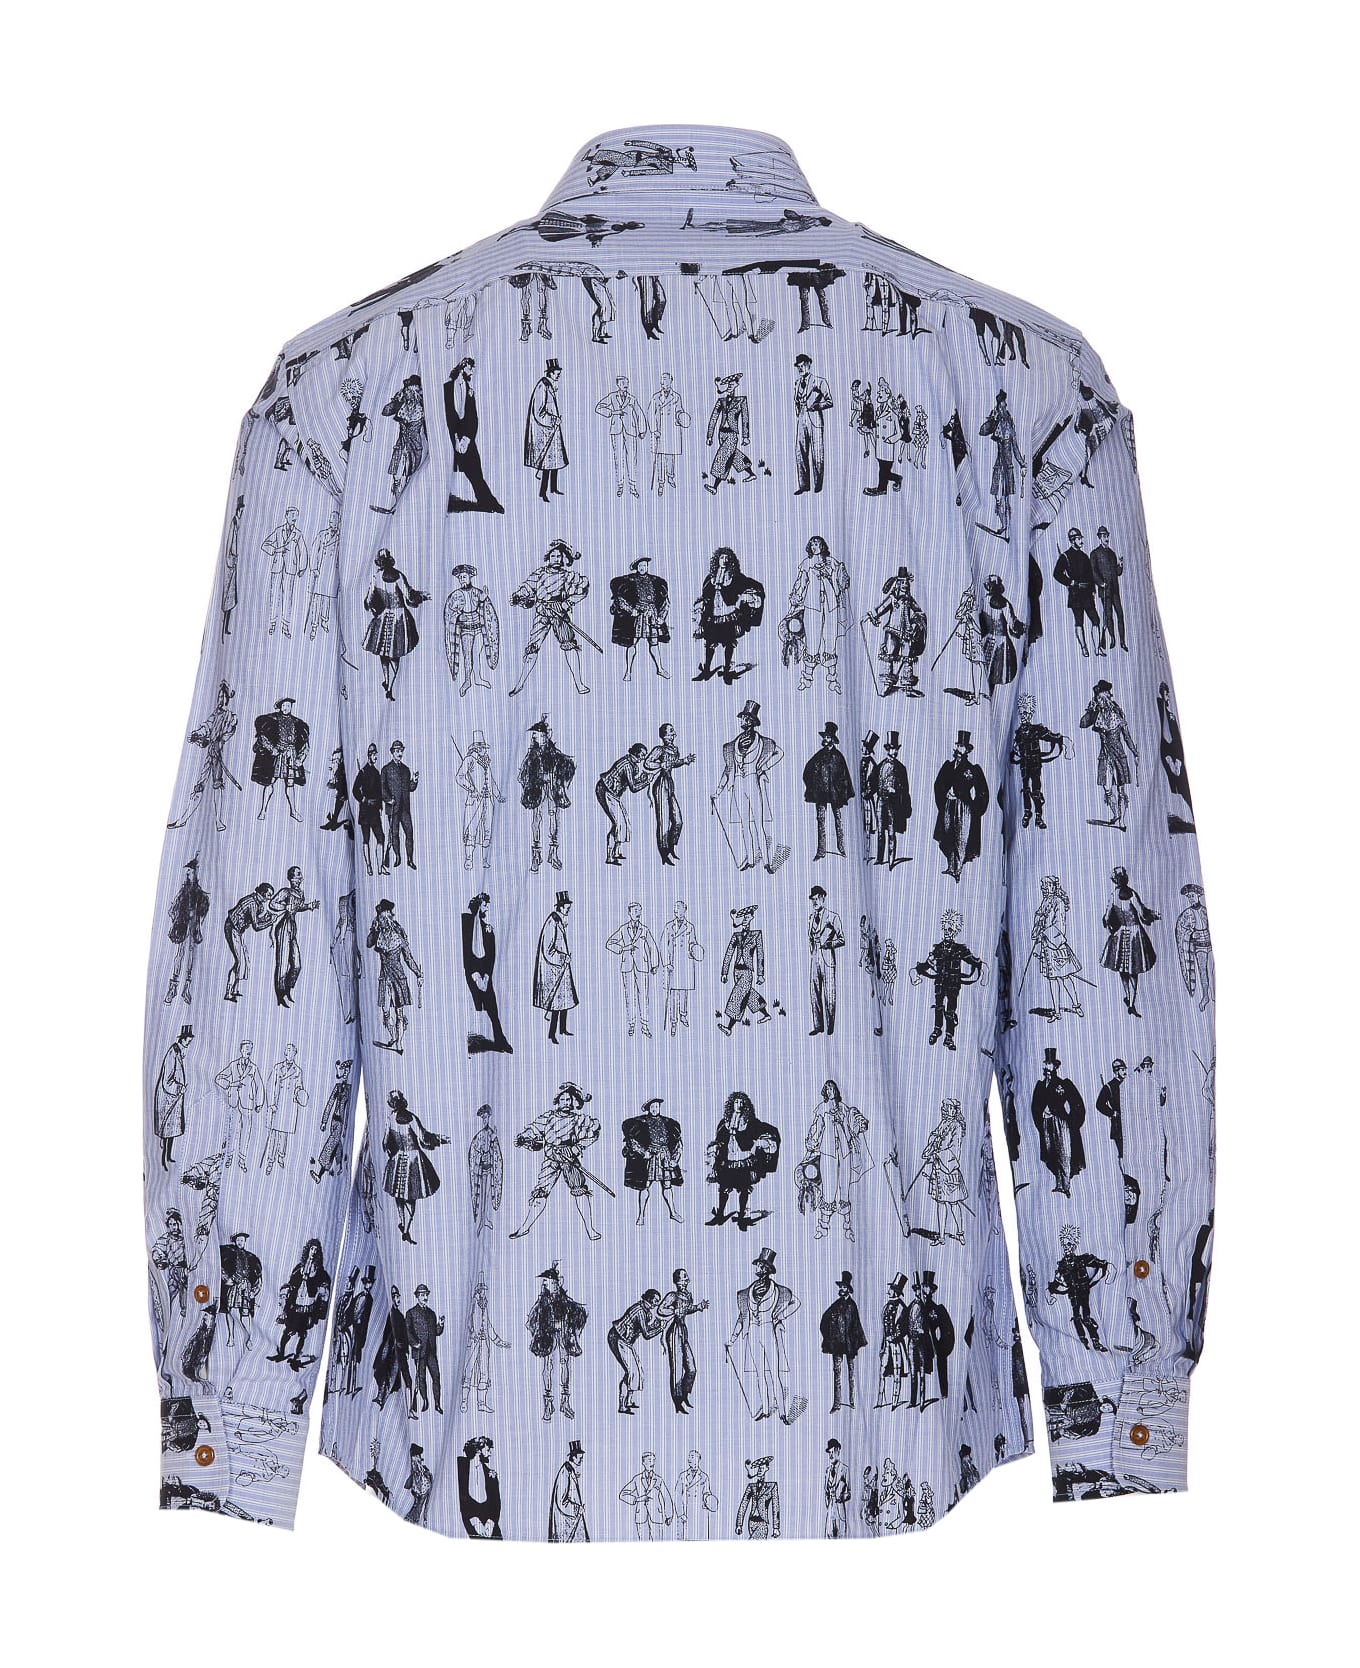 Vivienne Westwood 2 Button Krall Evolution Of Men Print Shirt - Blue シャツ